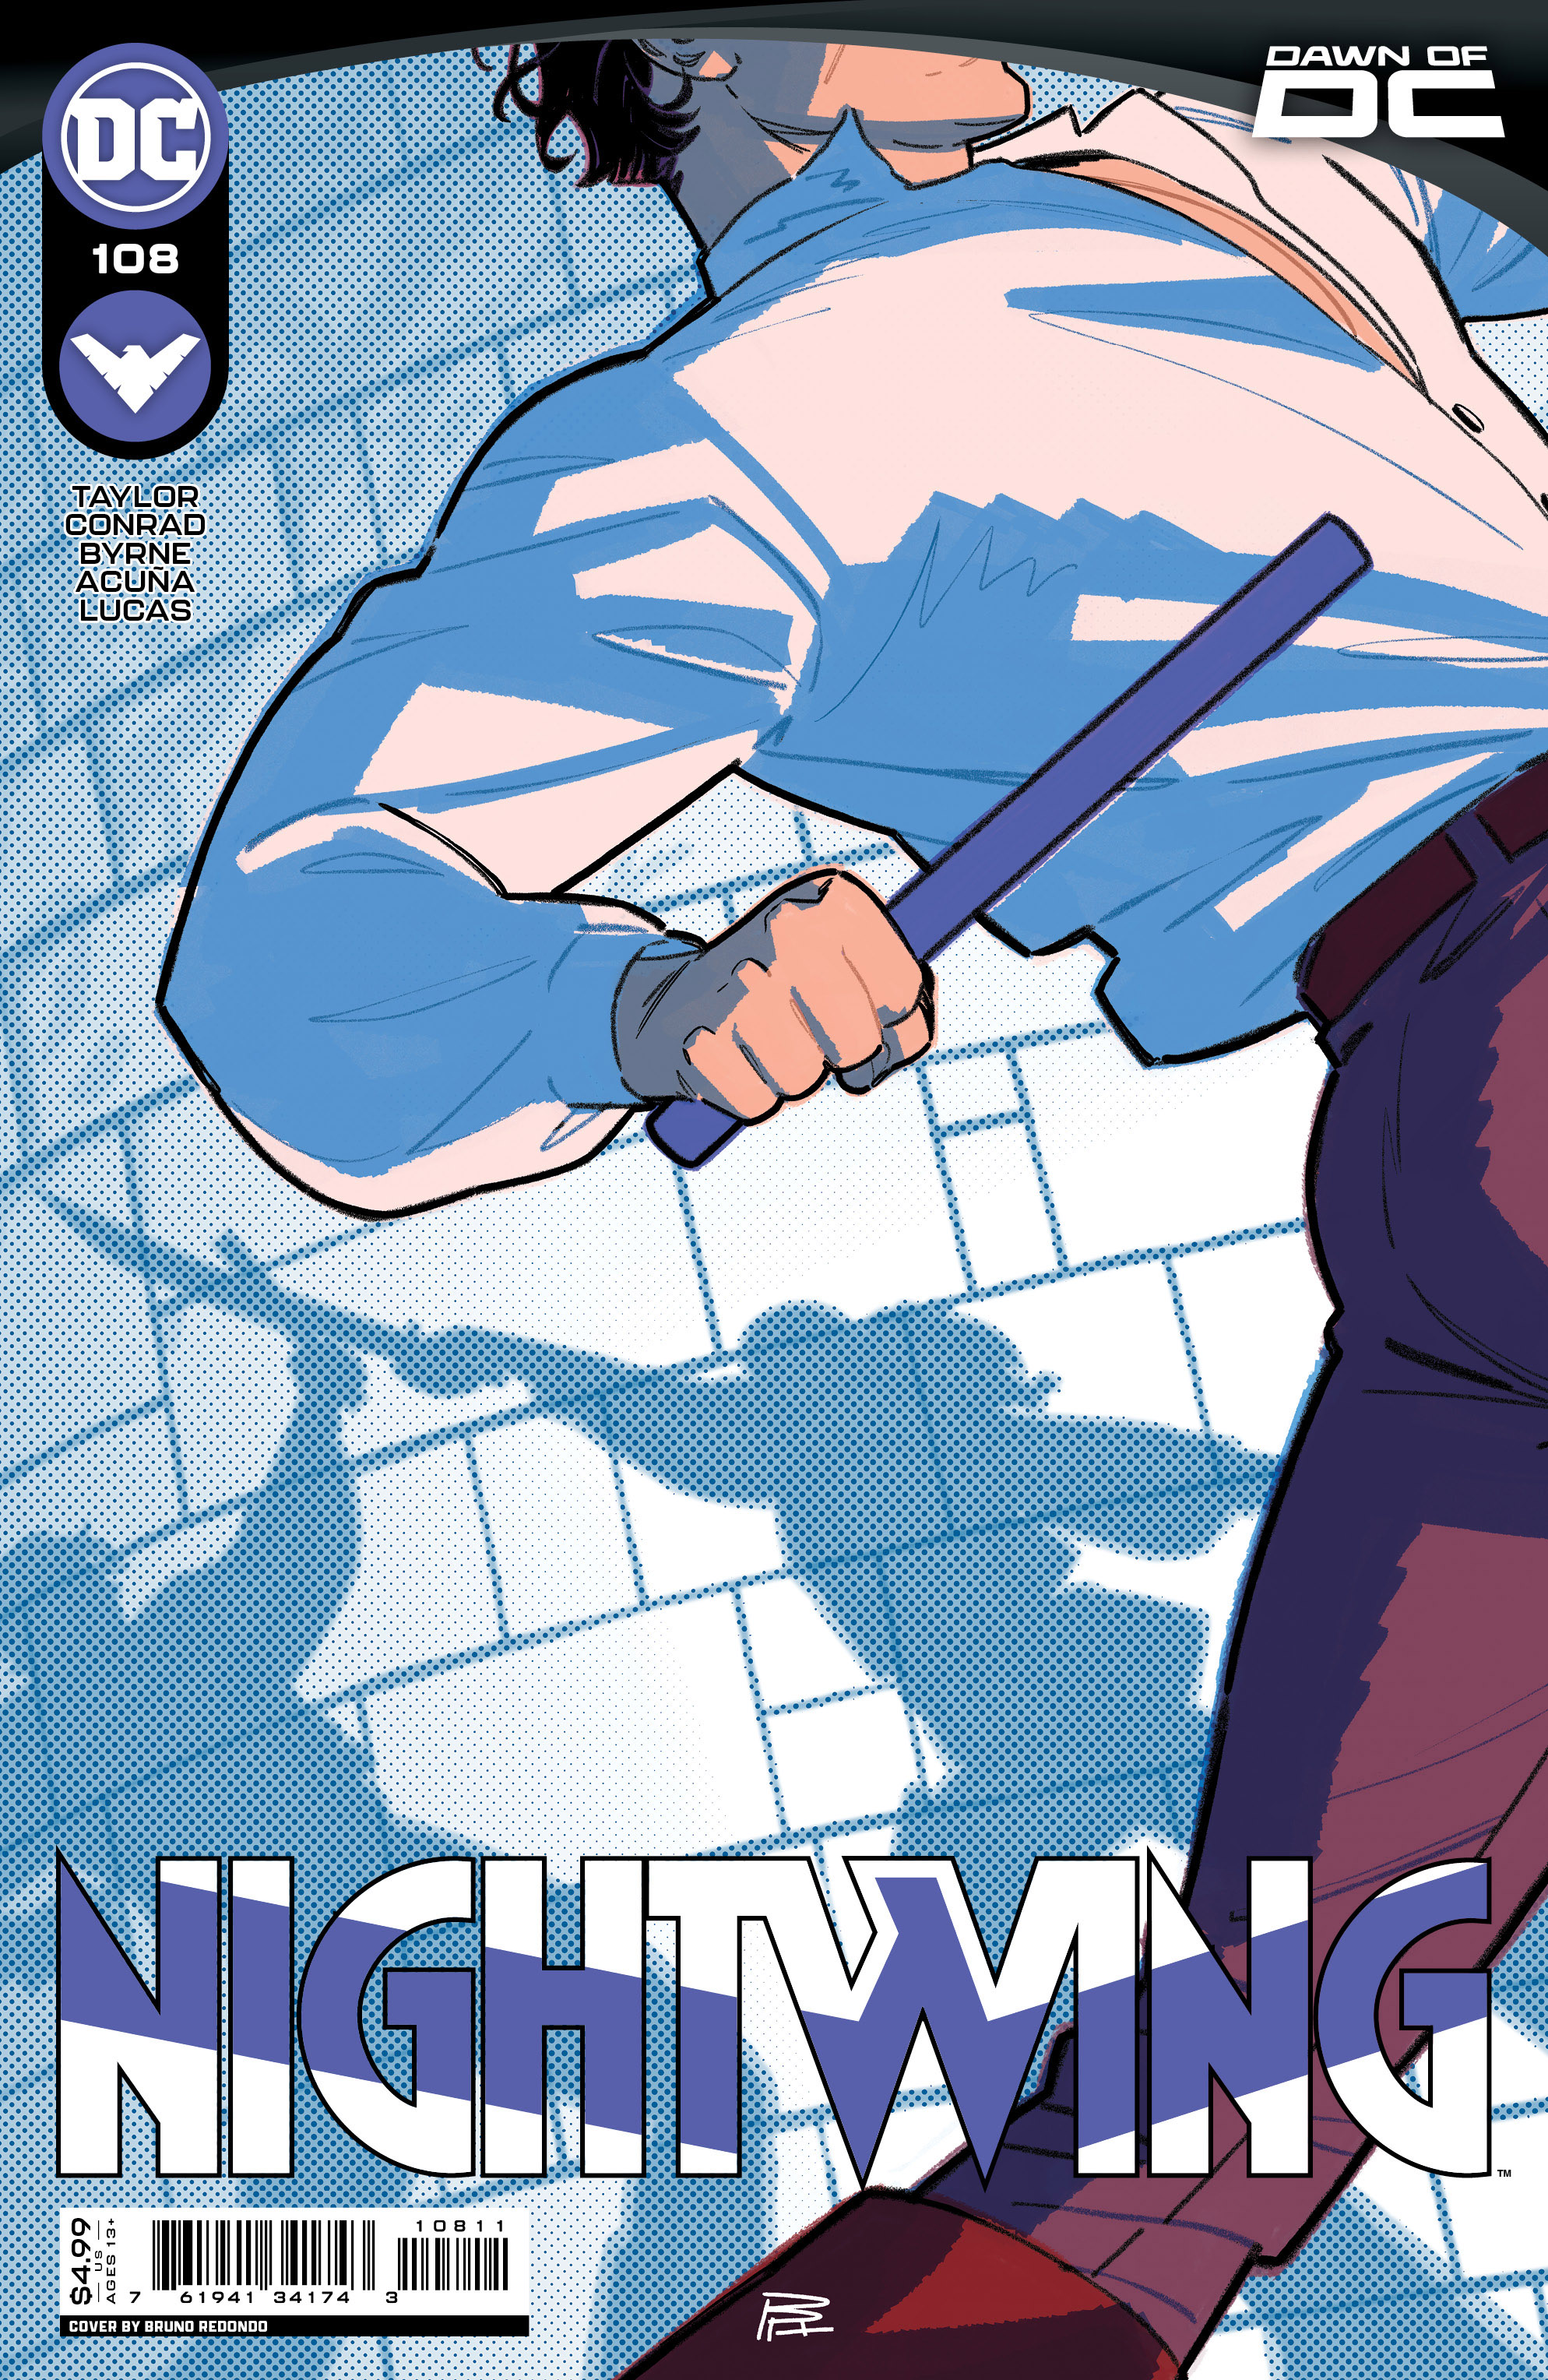 Nightwing #108 Cover A Bruno Redondo